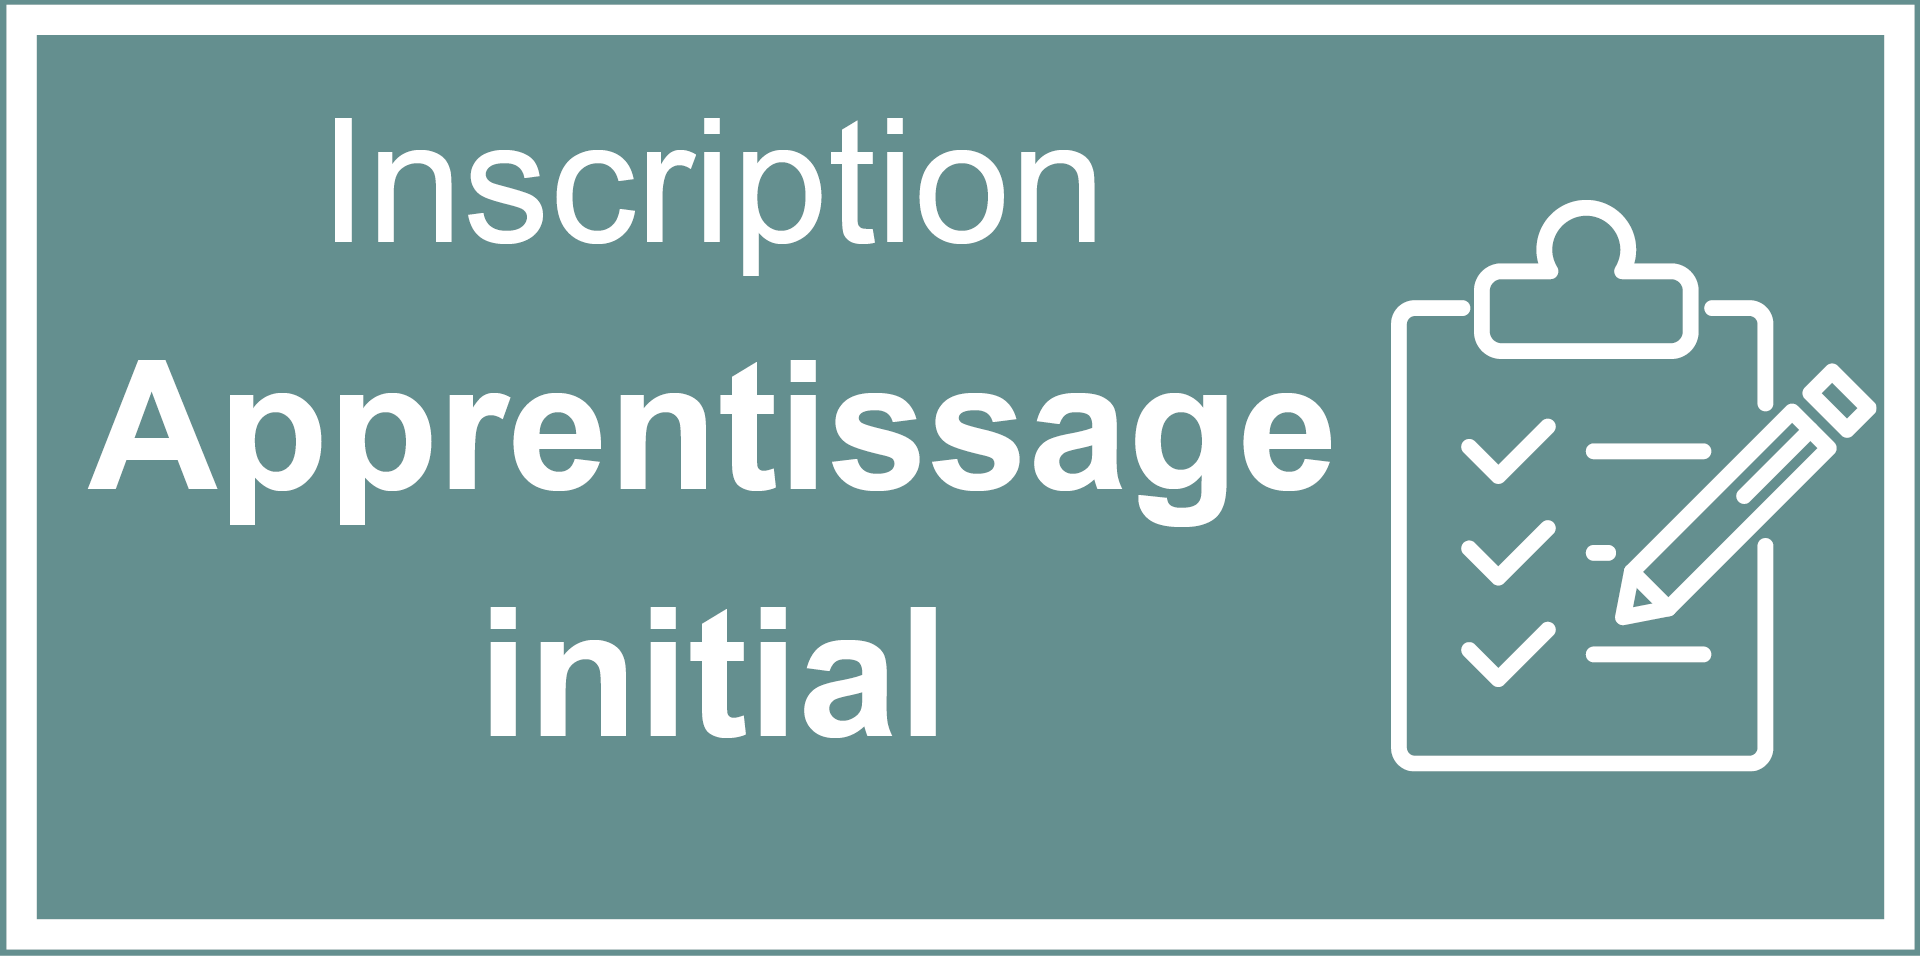 Inscription Apprentissage initial